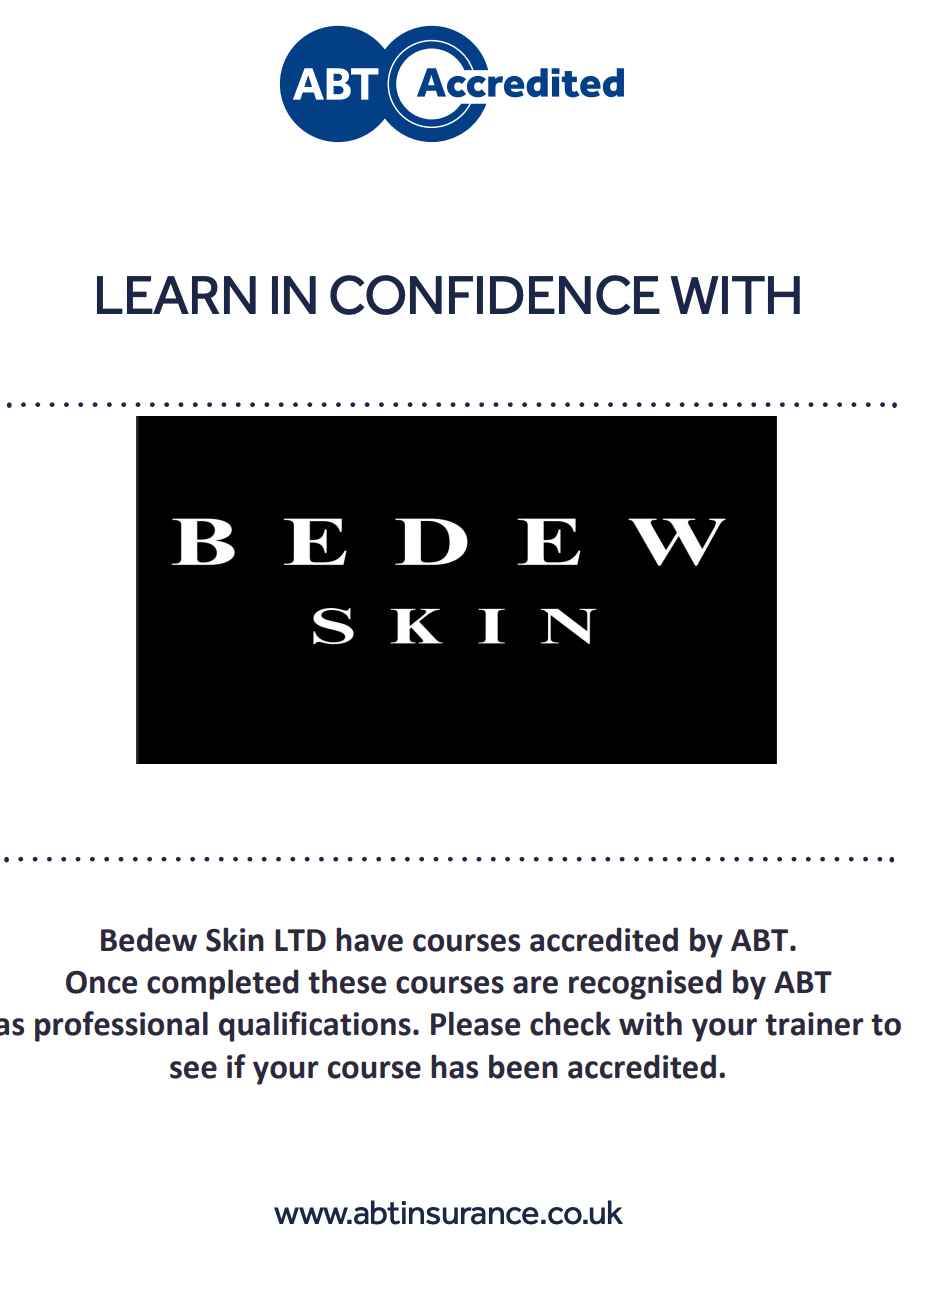 Bedew Skin Training Courses